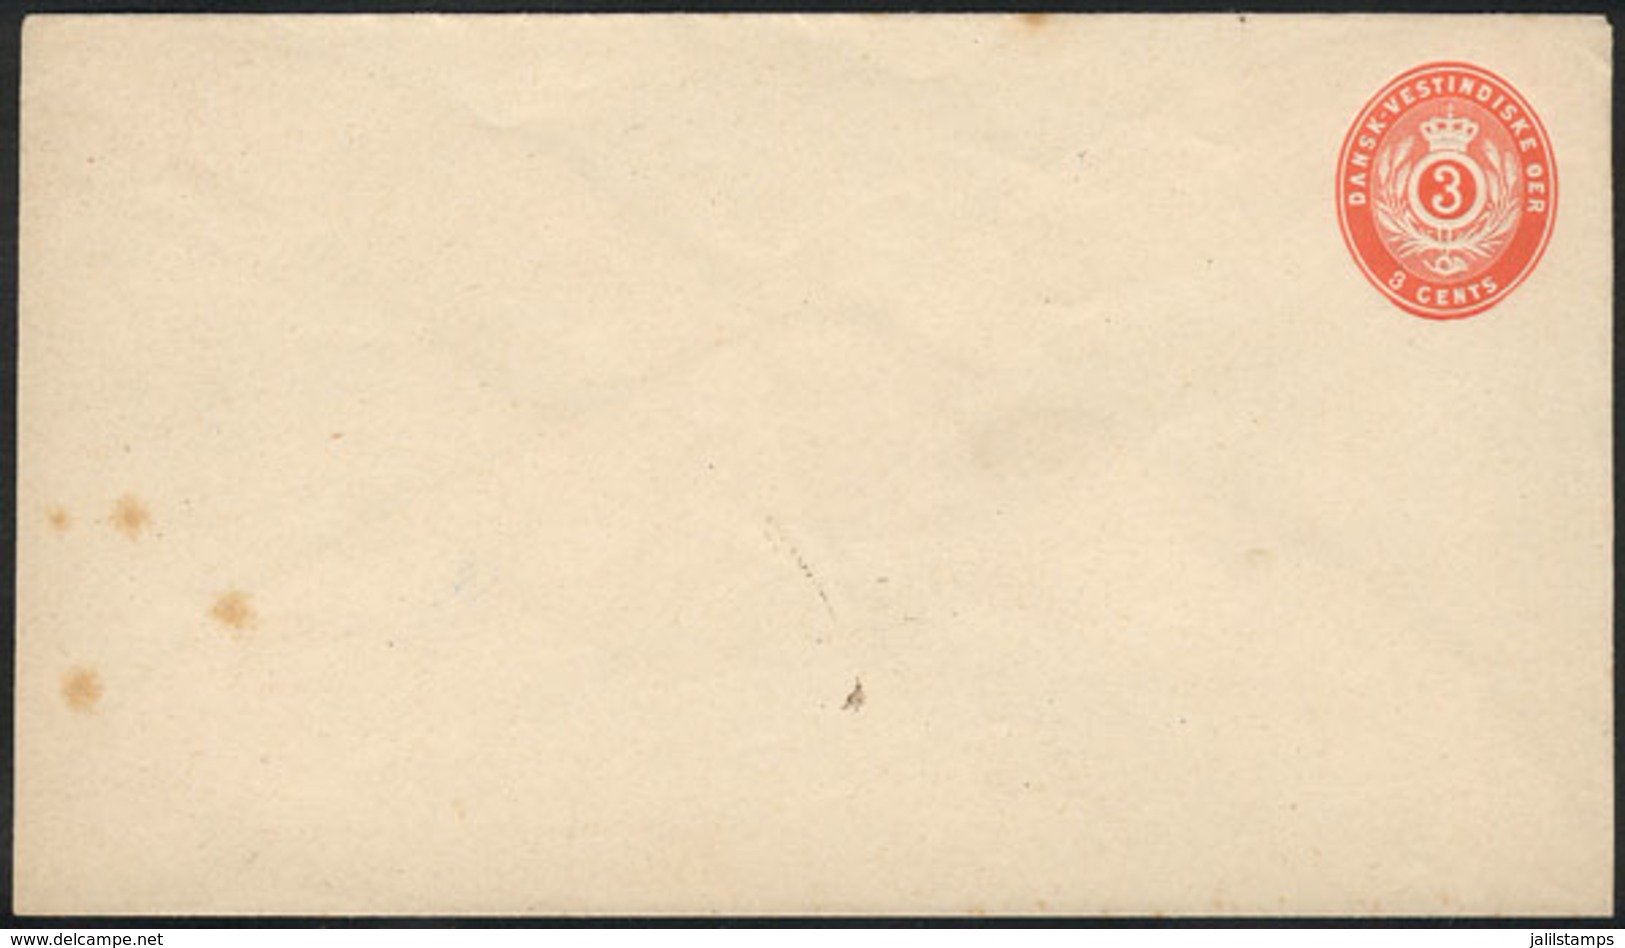 97 DANISH ANTILLES: Unused 3c. Stationery Envelope, Fine Quality, Low Start. - Dinamarca (Antillas)